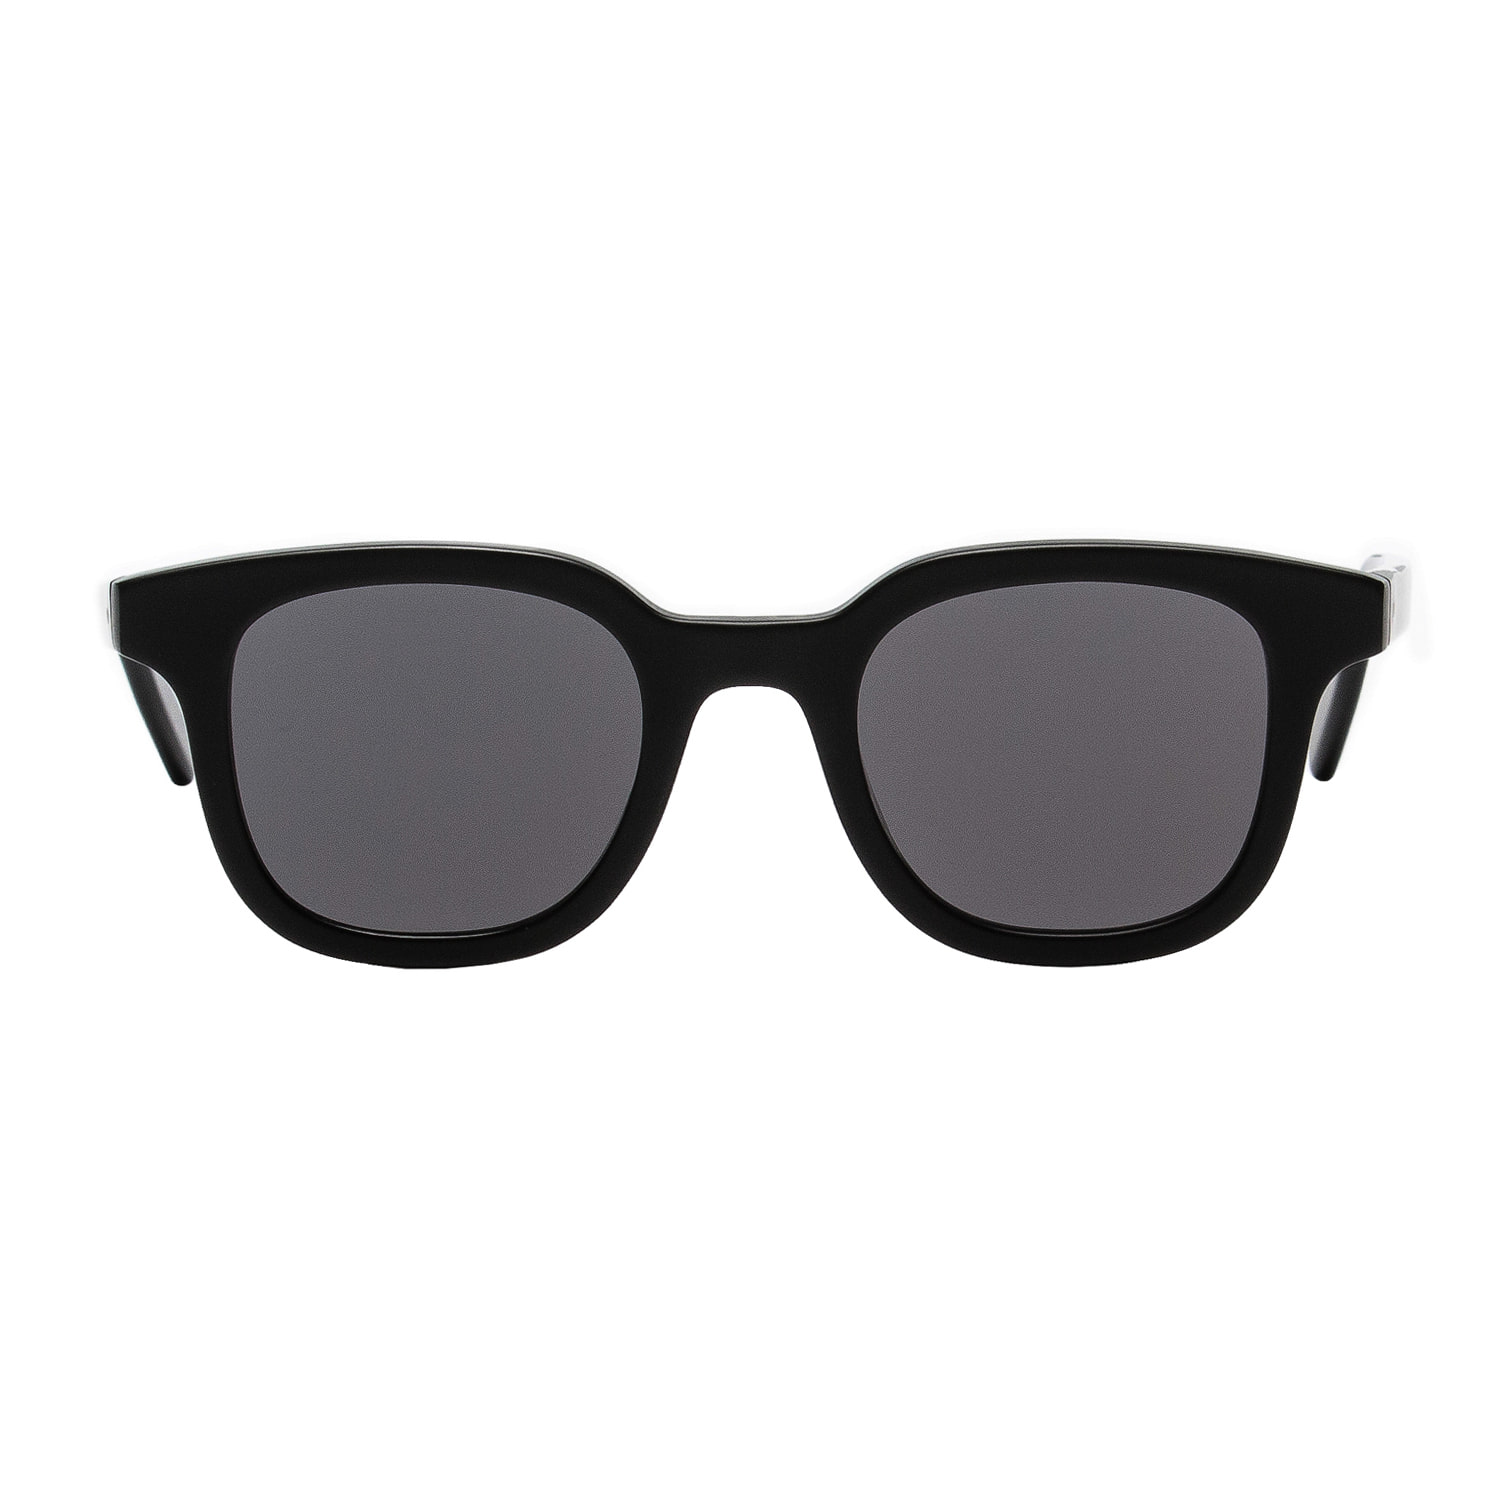 TRIGGER Sunglasses - Matte Black